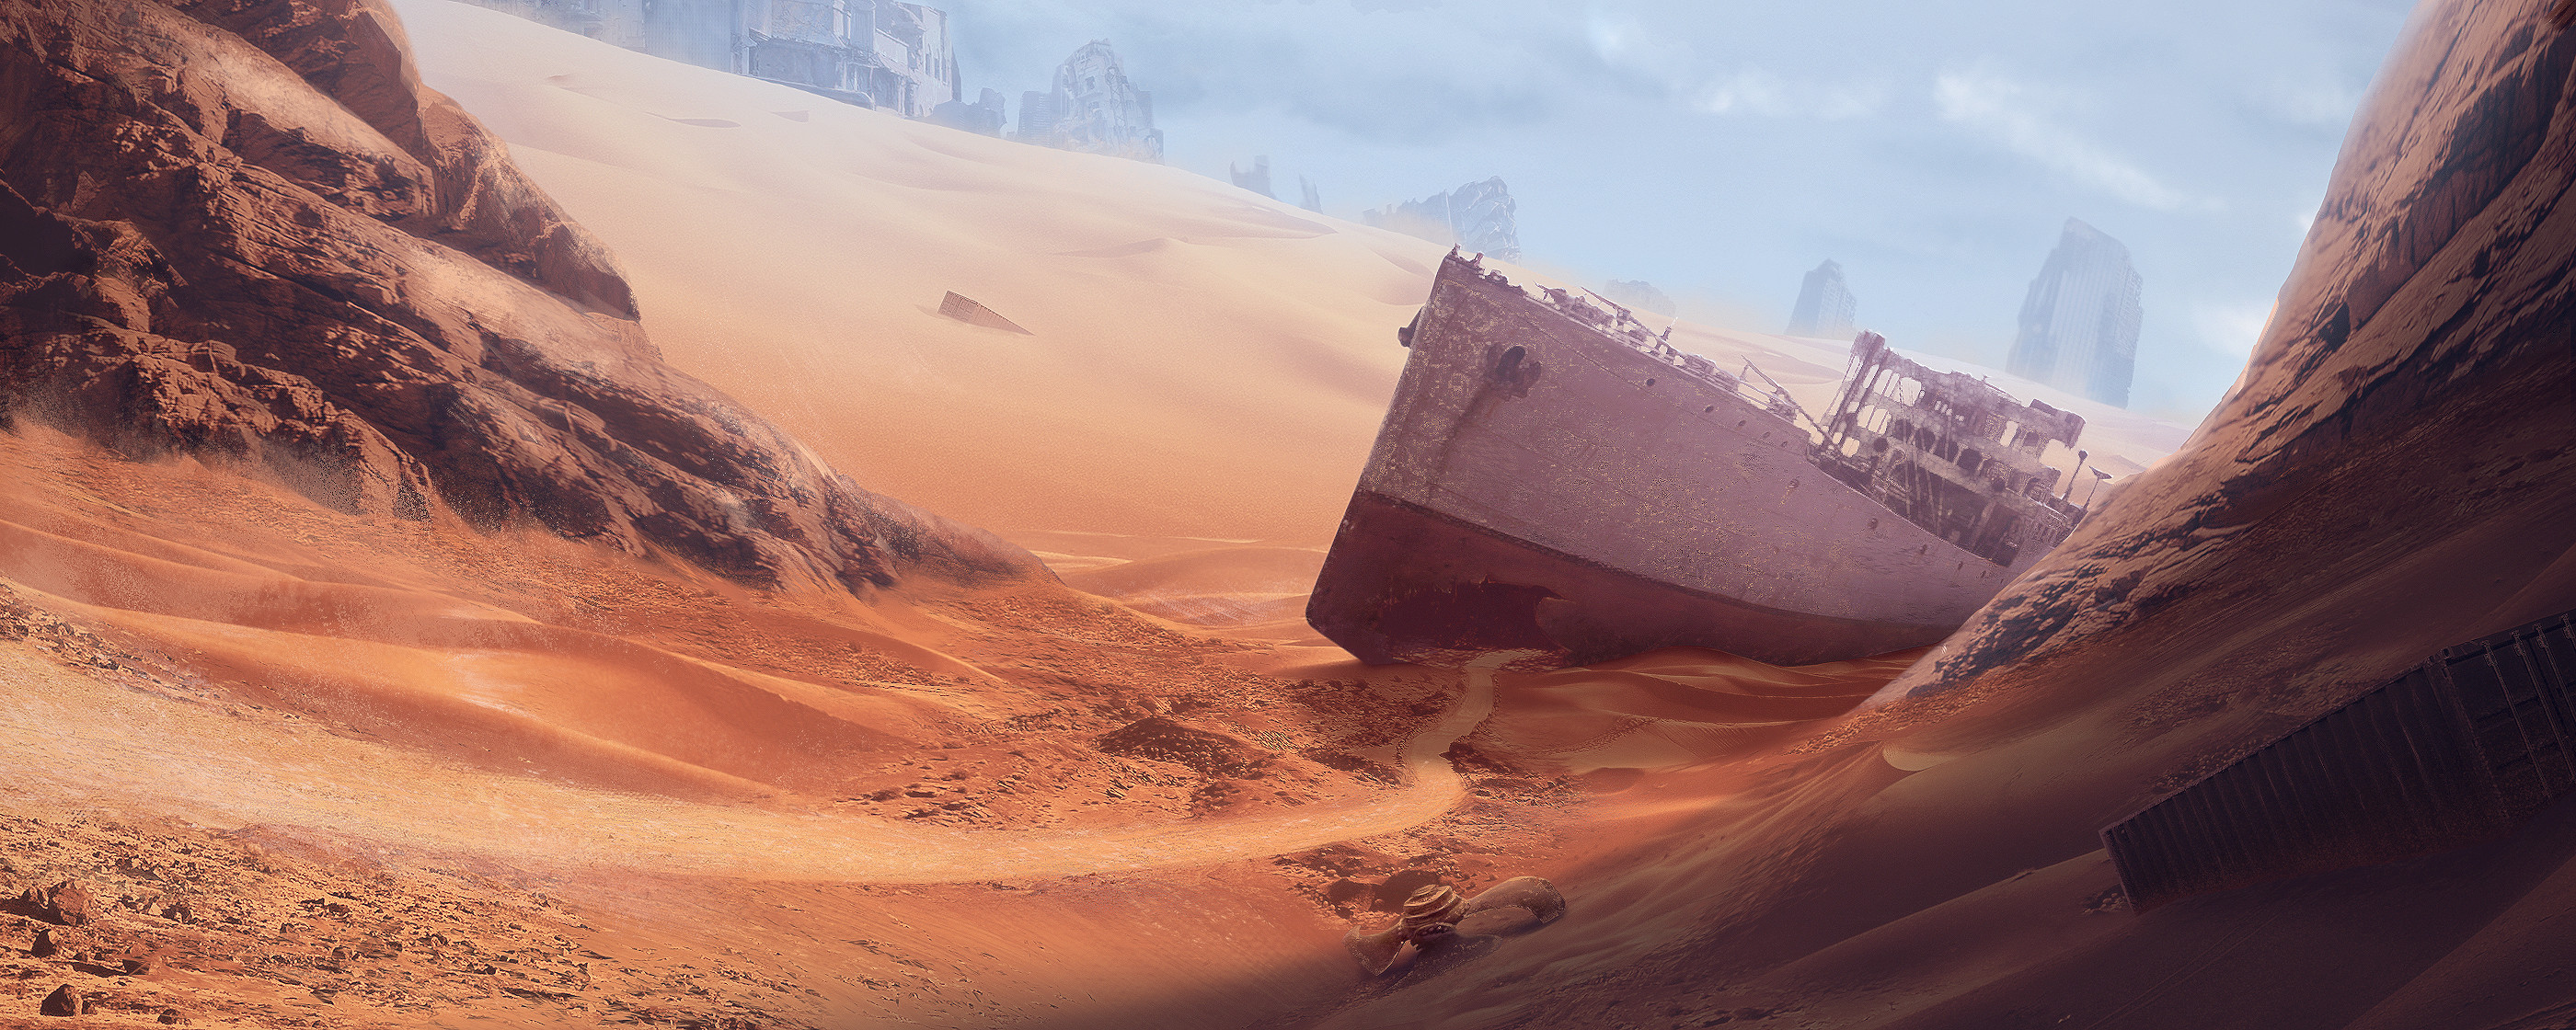 General 2800x1120 artwork ArtStation apocalyptic futuristic science fiction shipwreck ship vehicle desert